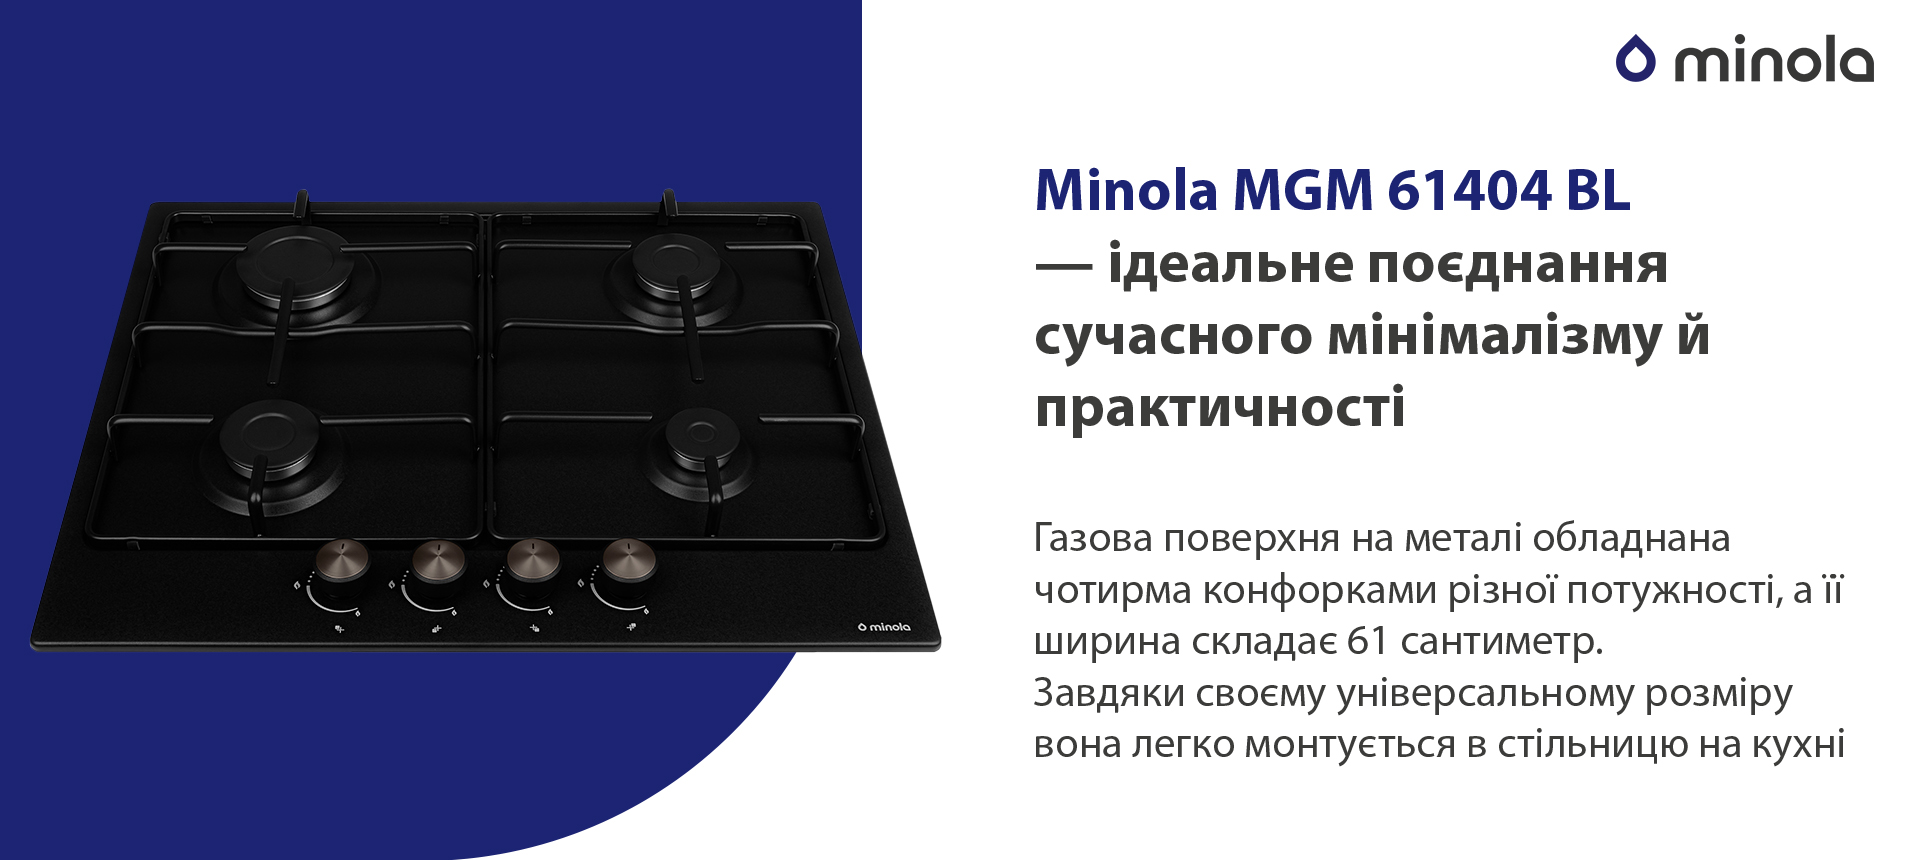 Minola MGM 61404 BL в магазине в Киеве - фото 10